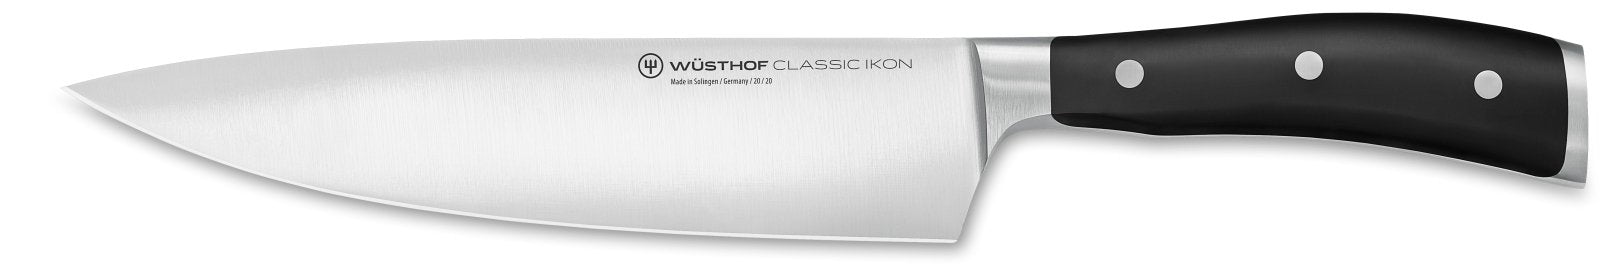 Wusthof Classic IKON Knife Block Set 7 Piece - WT1090370701 - The Cotswold Knife Company